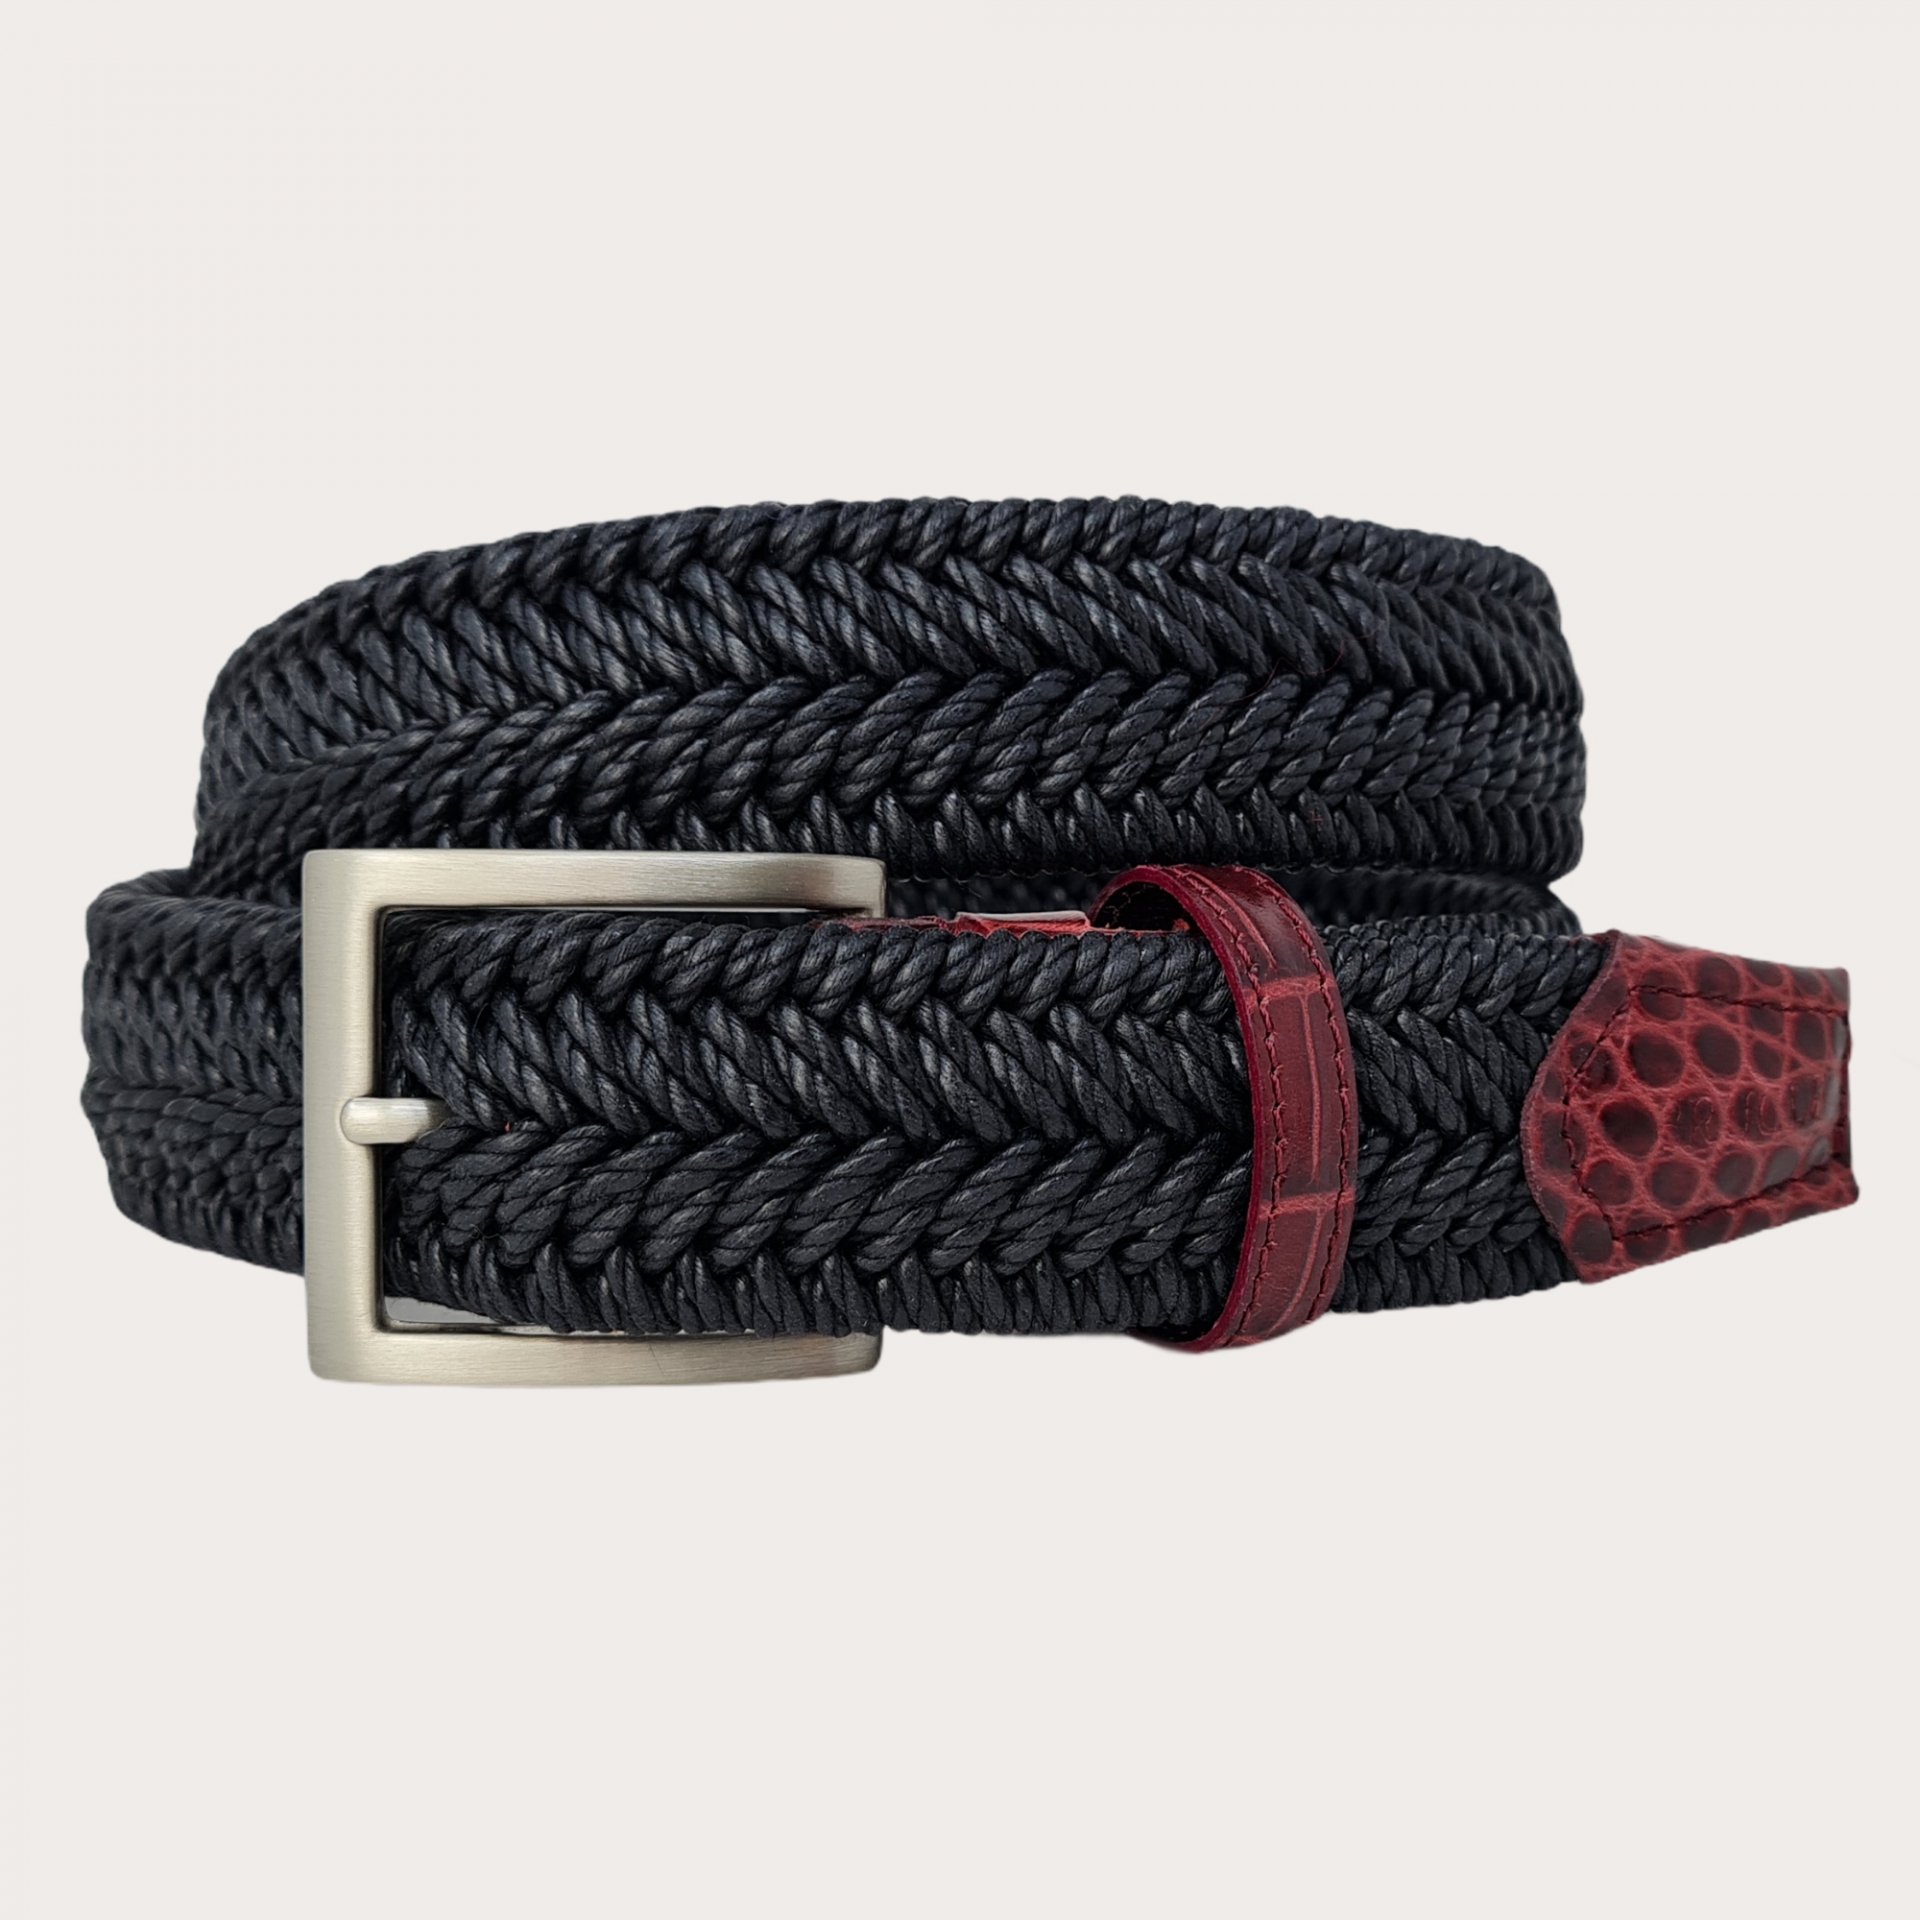 BRUCLE Black braided elastic belt with burgundy leather